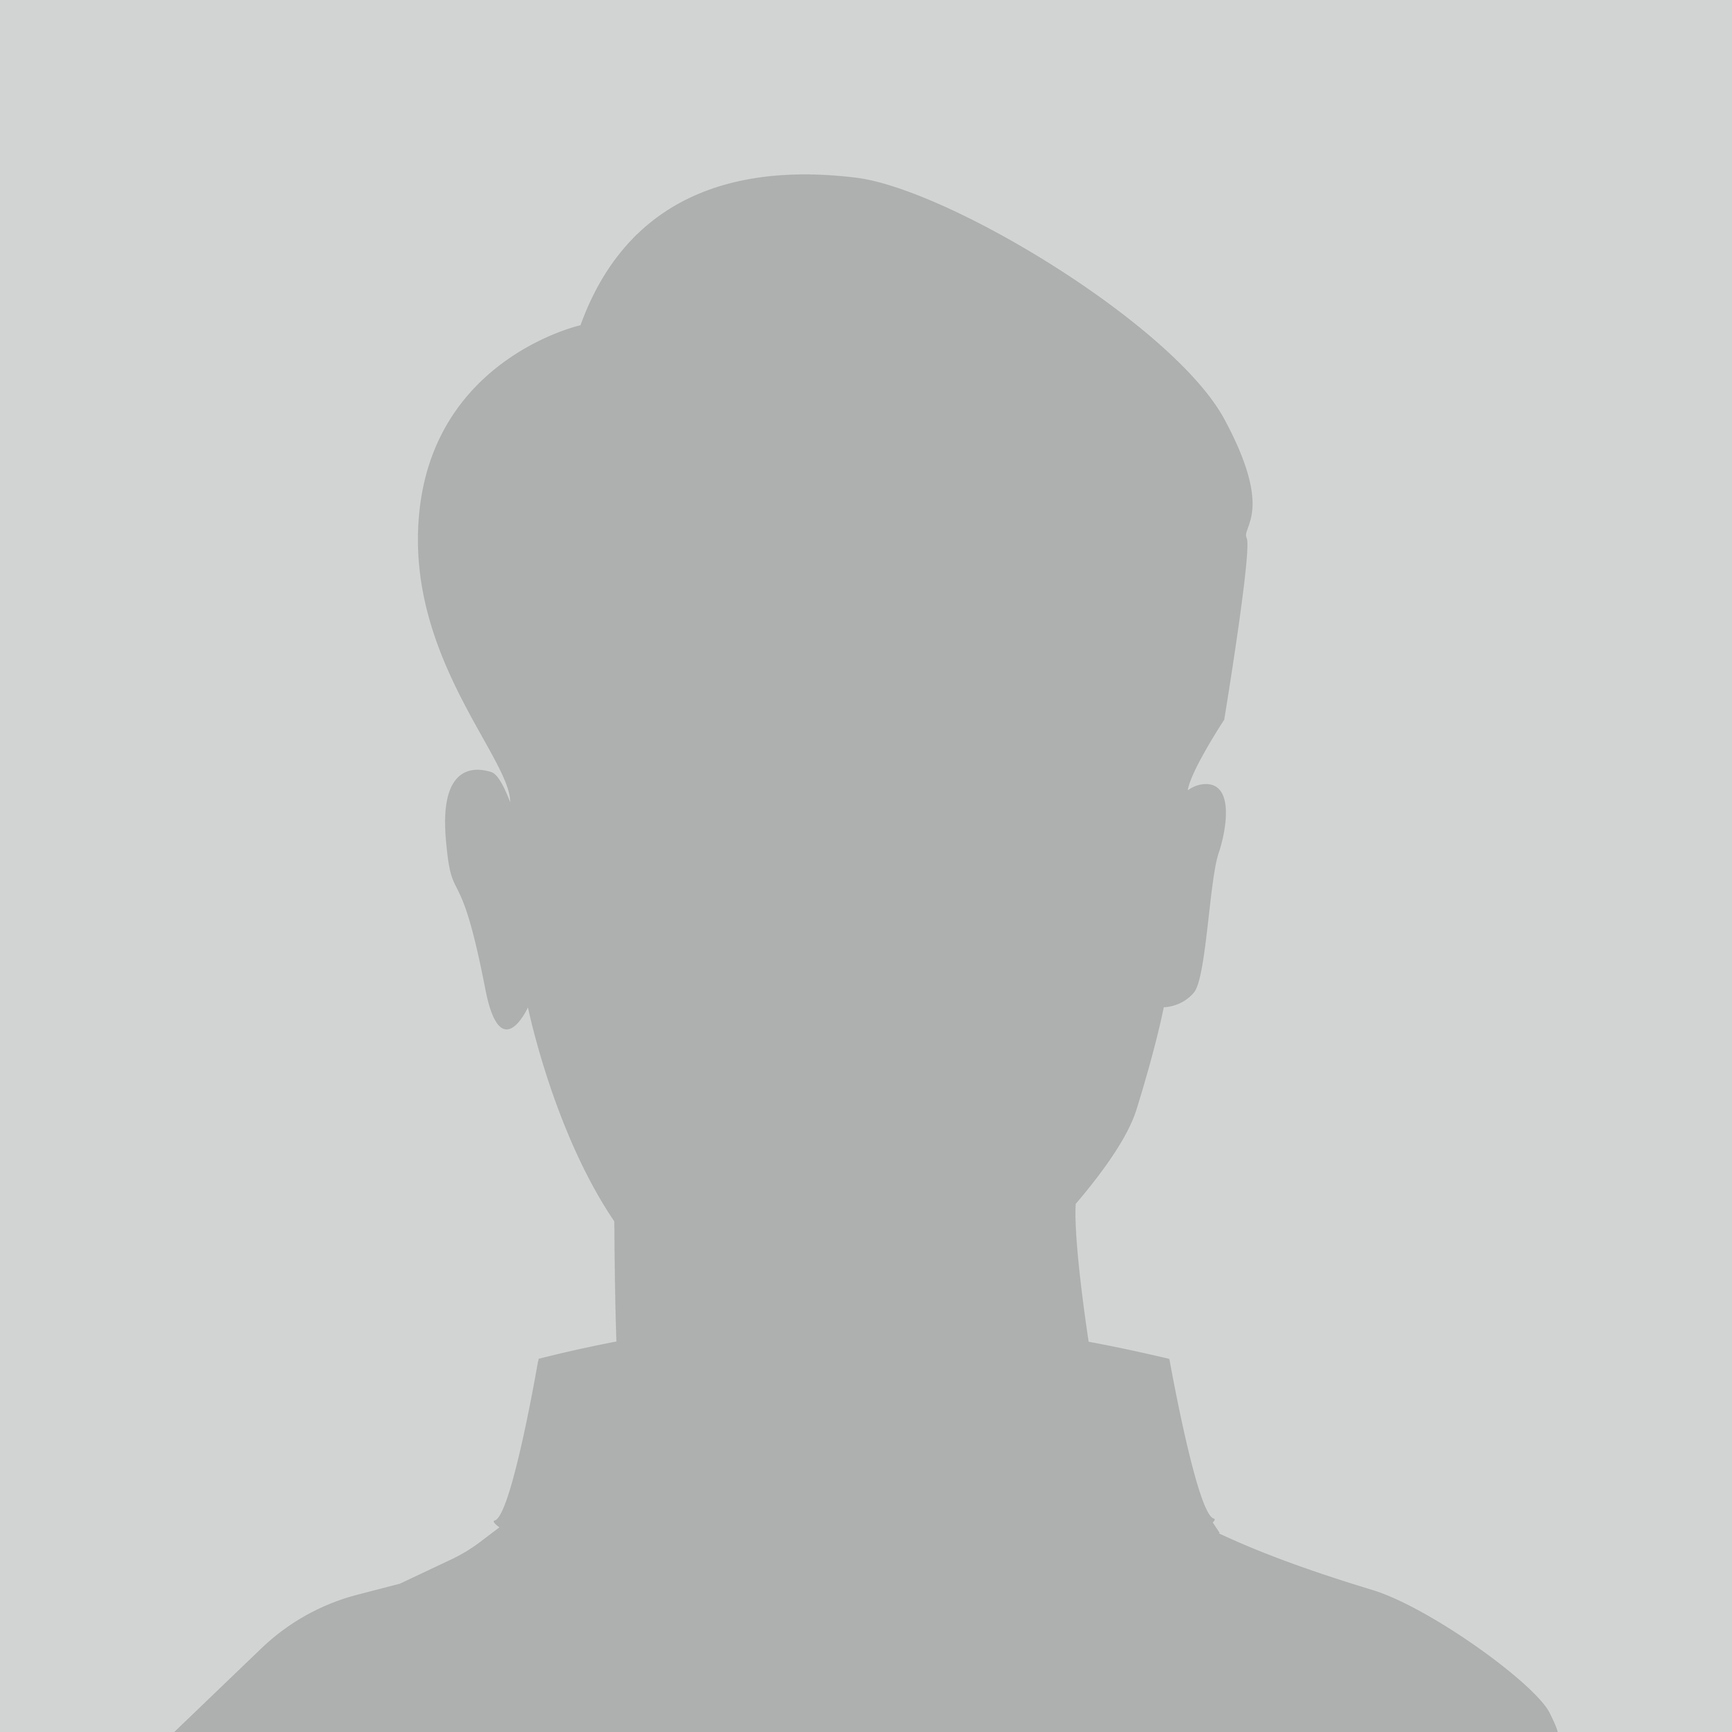 Default placeholder profile icon